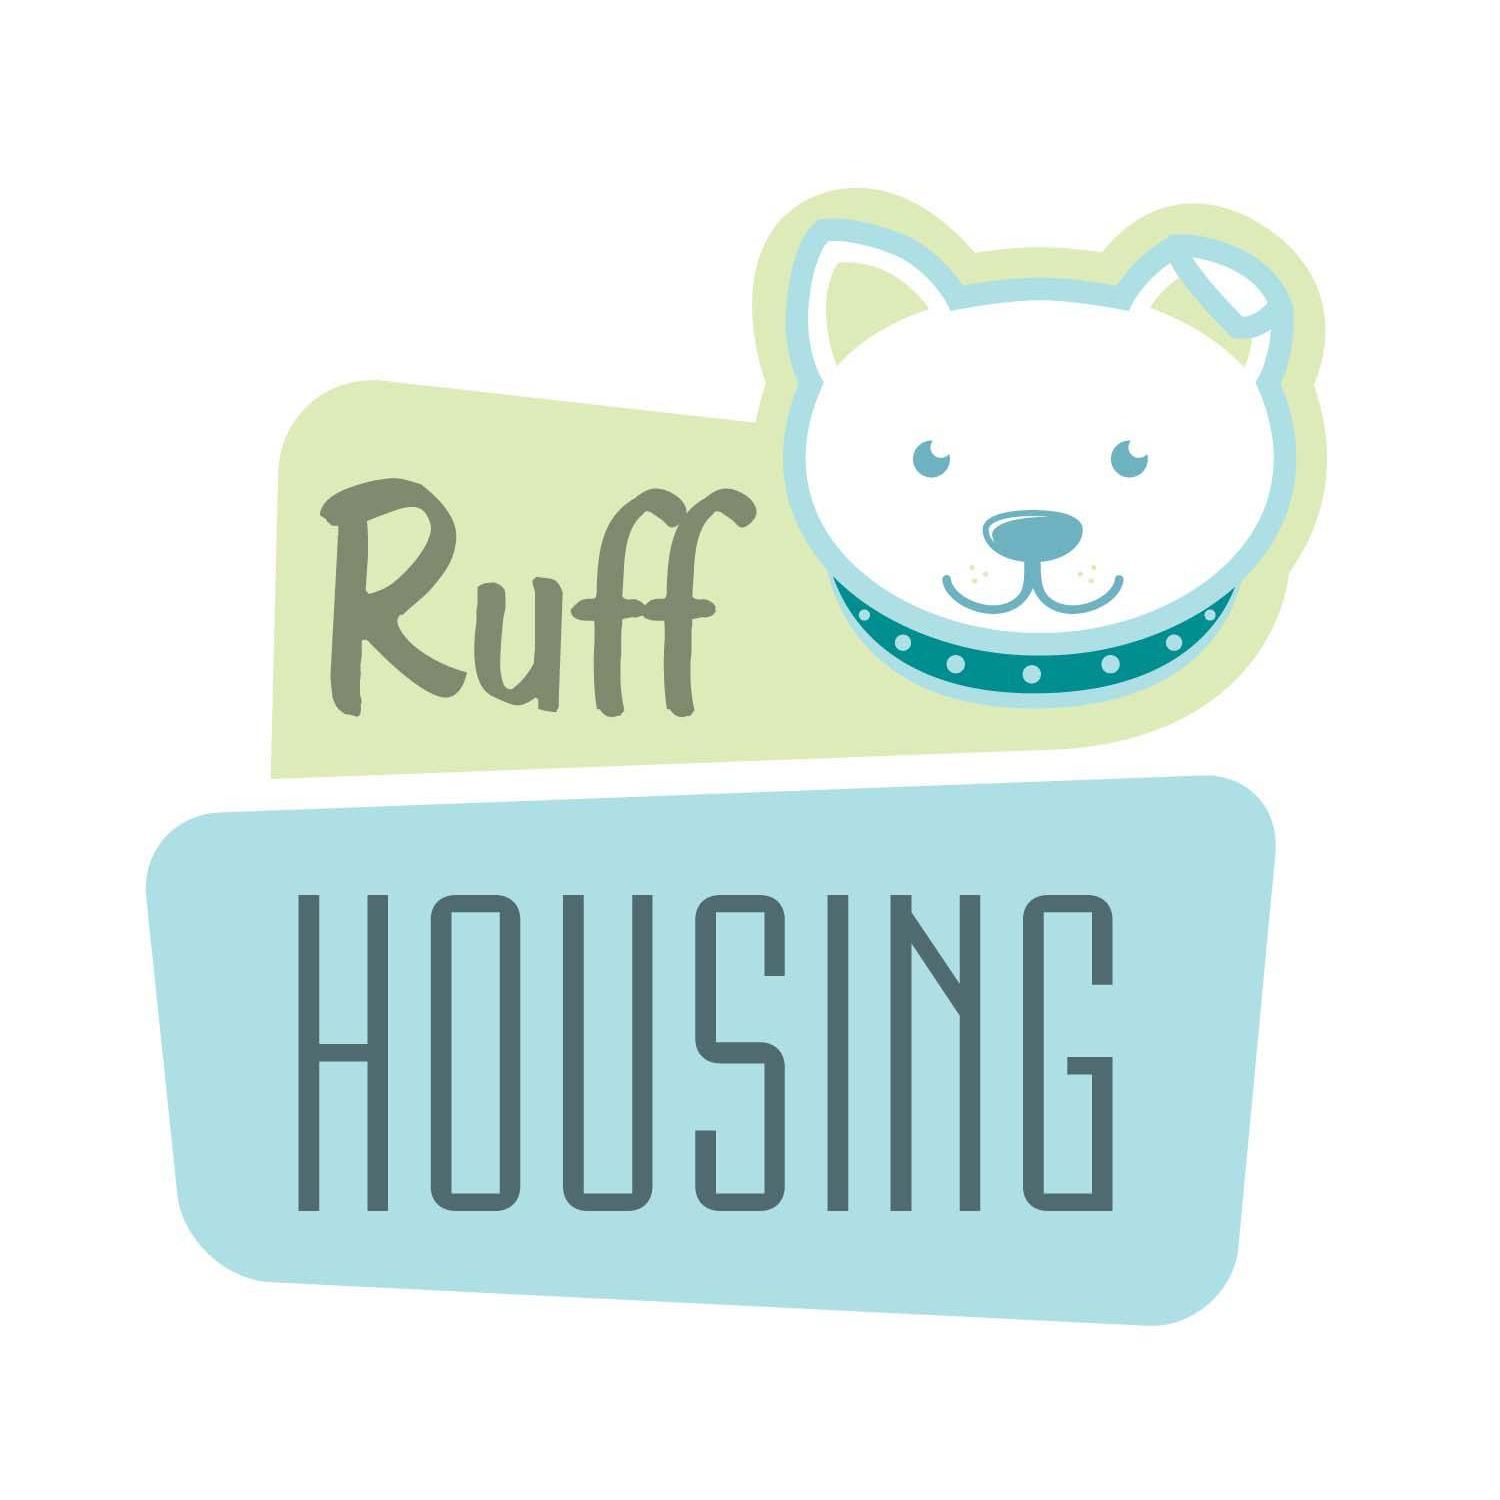 Ruff Housing Cary